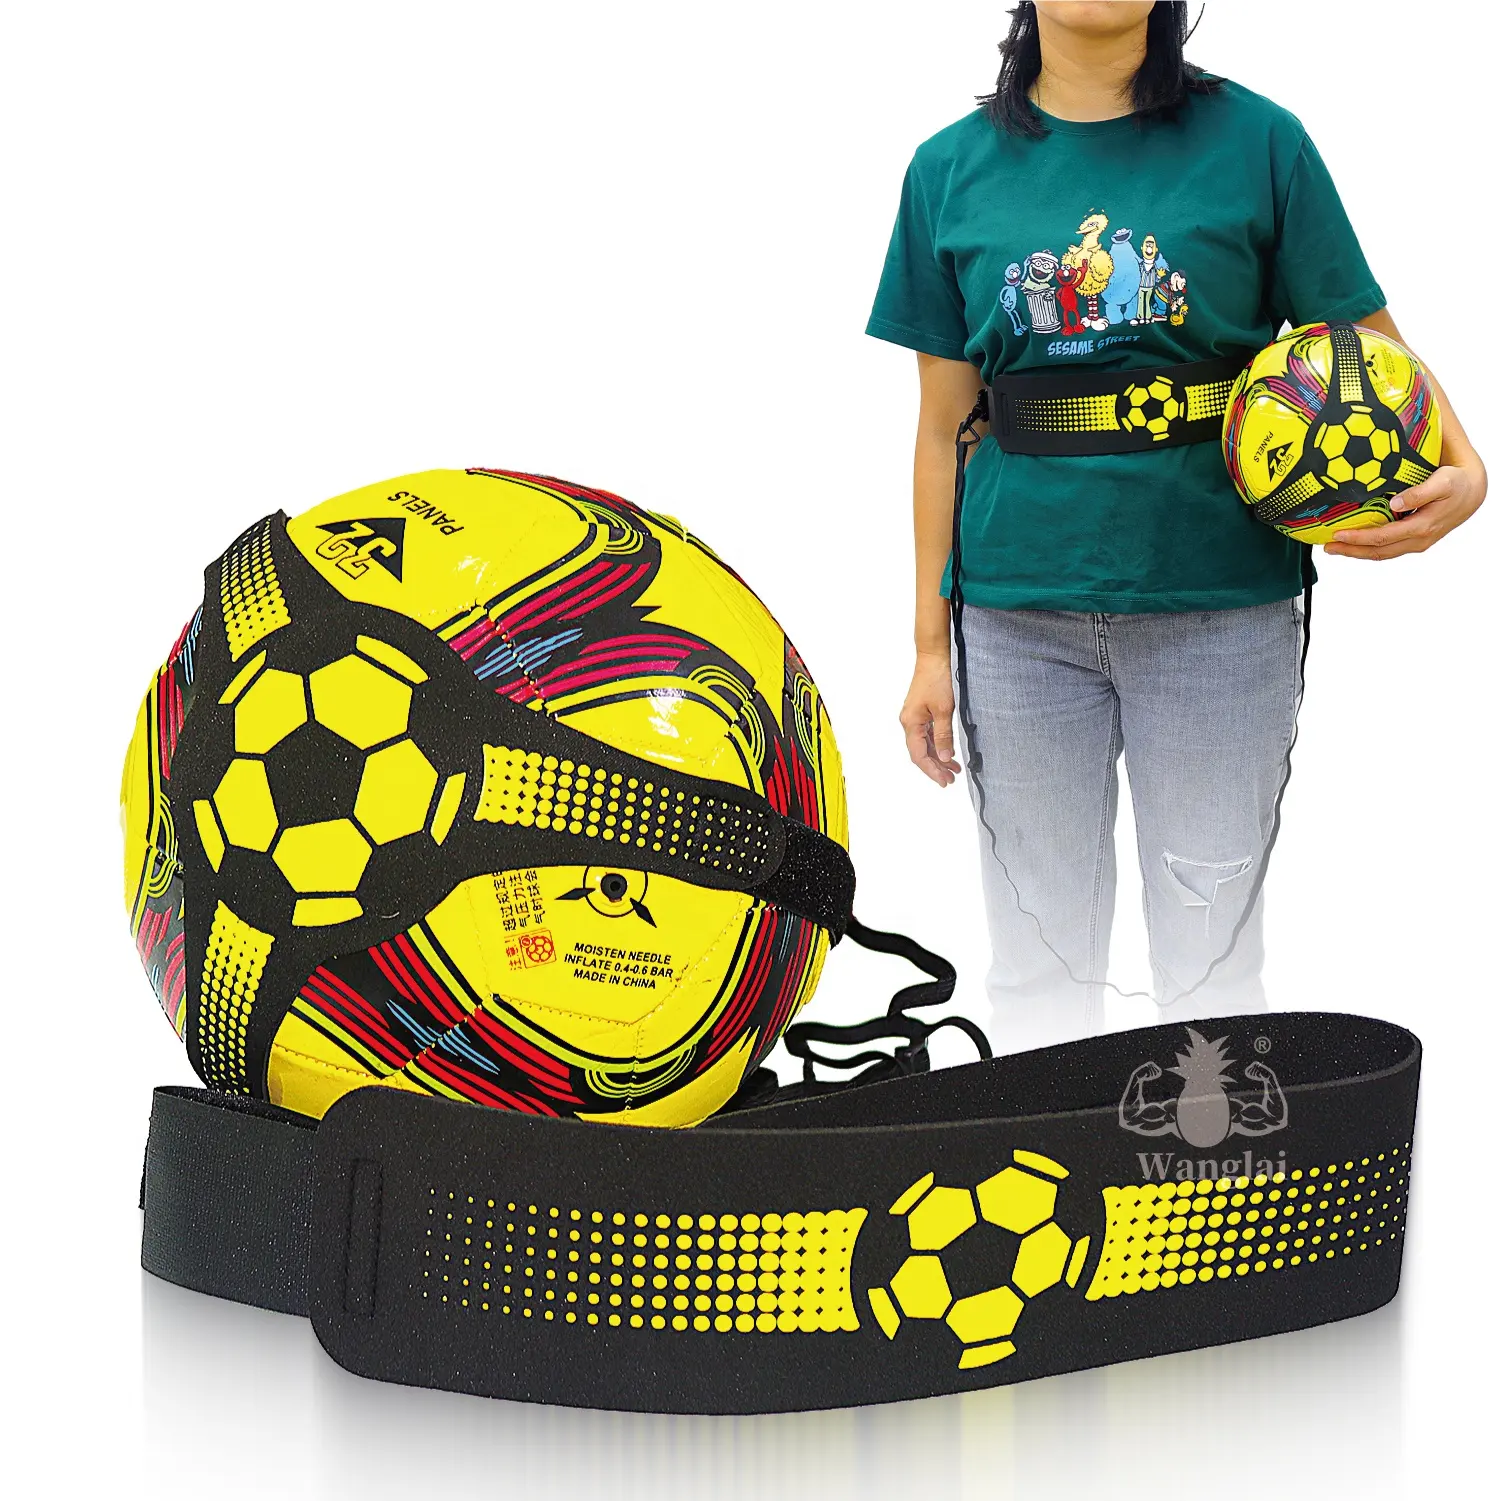 Soccer/Volleyball/Rugby Trainer Football Practice Belt Football Kick Training Belt Control Skills Adjustable Waist Belt